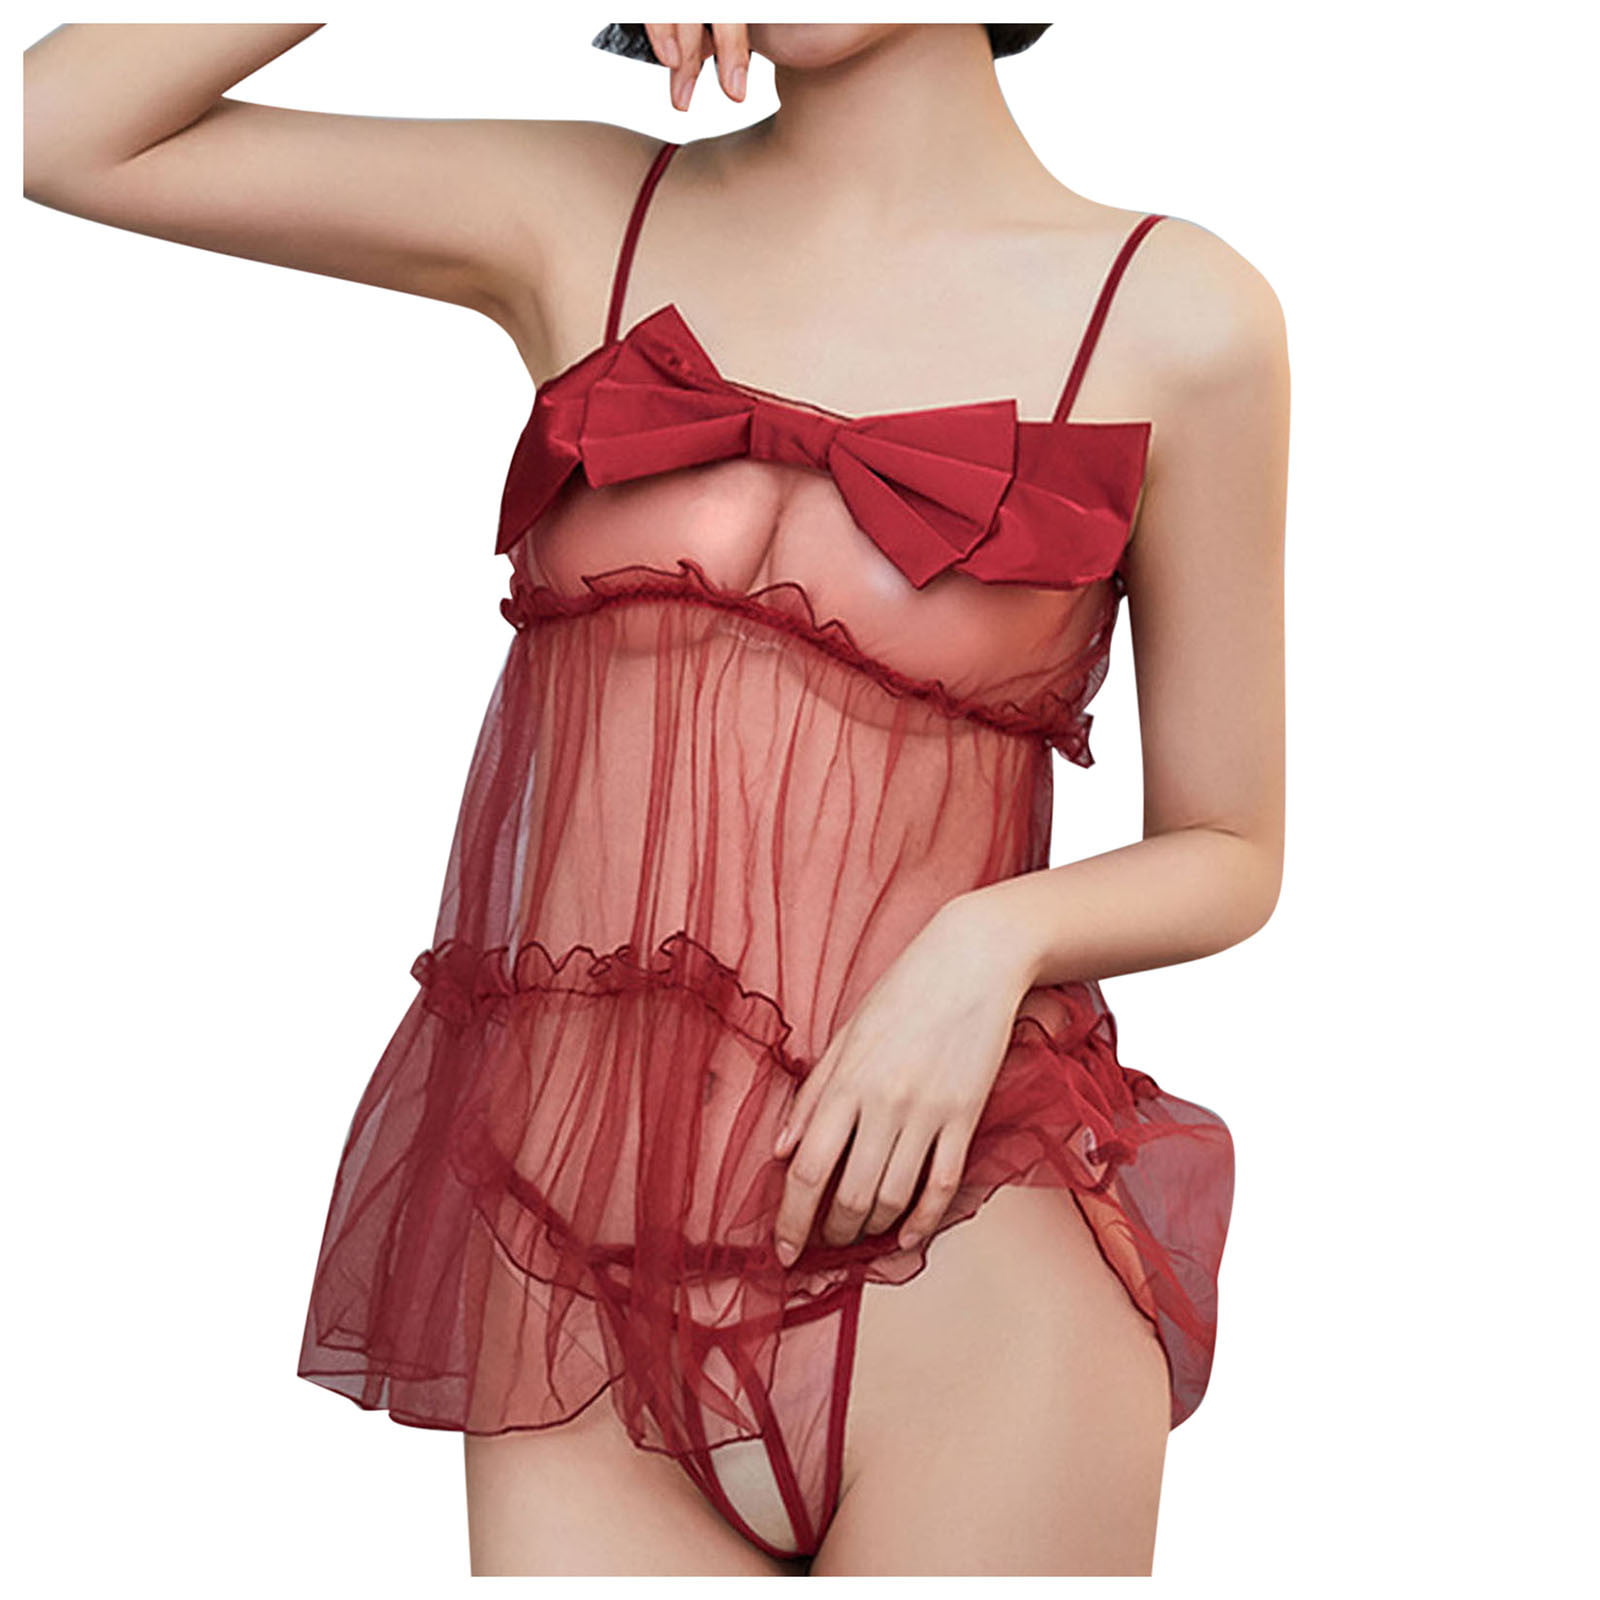 Women sexy lingerie extra size fun underwear bud sexy pajamas allure  transparent gauze fun nightdress